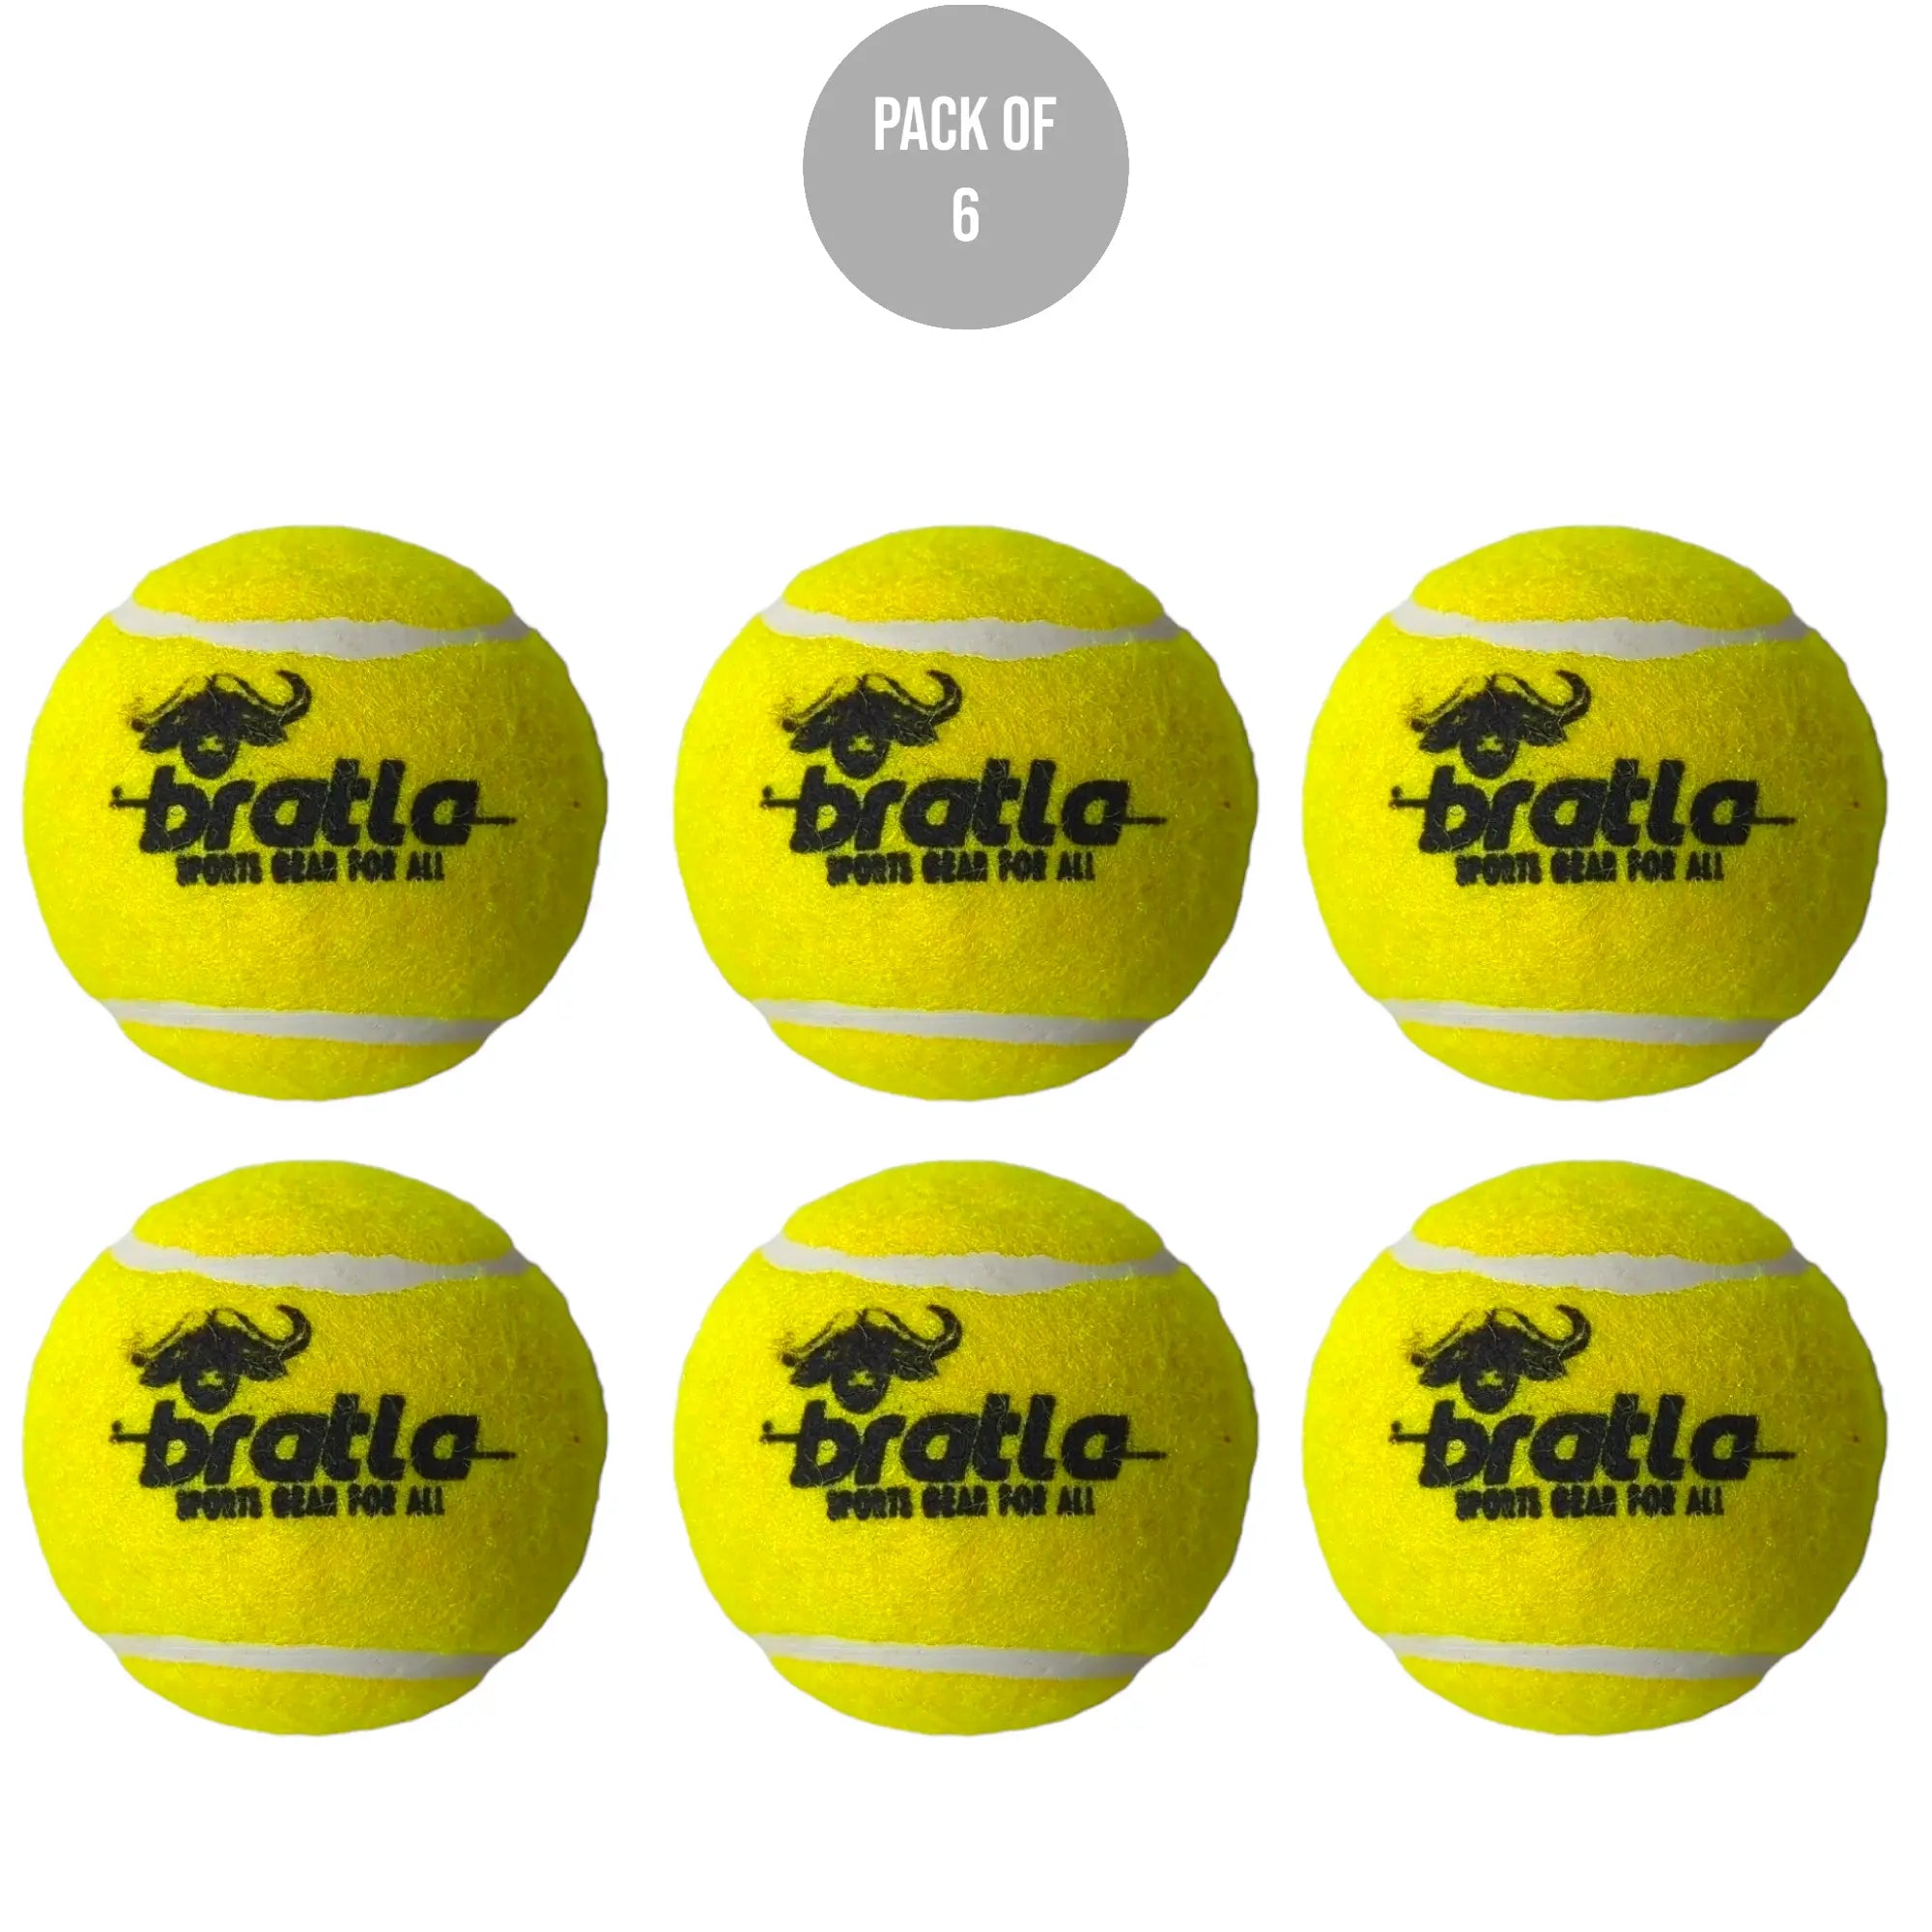 Bratla Pro Cricket Tennis Tape Ball Pack of 3 Lightweight - Pack of 6 - BALL - SOFTBALL